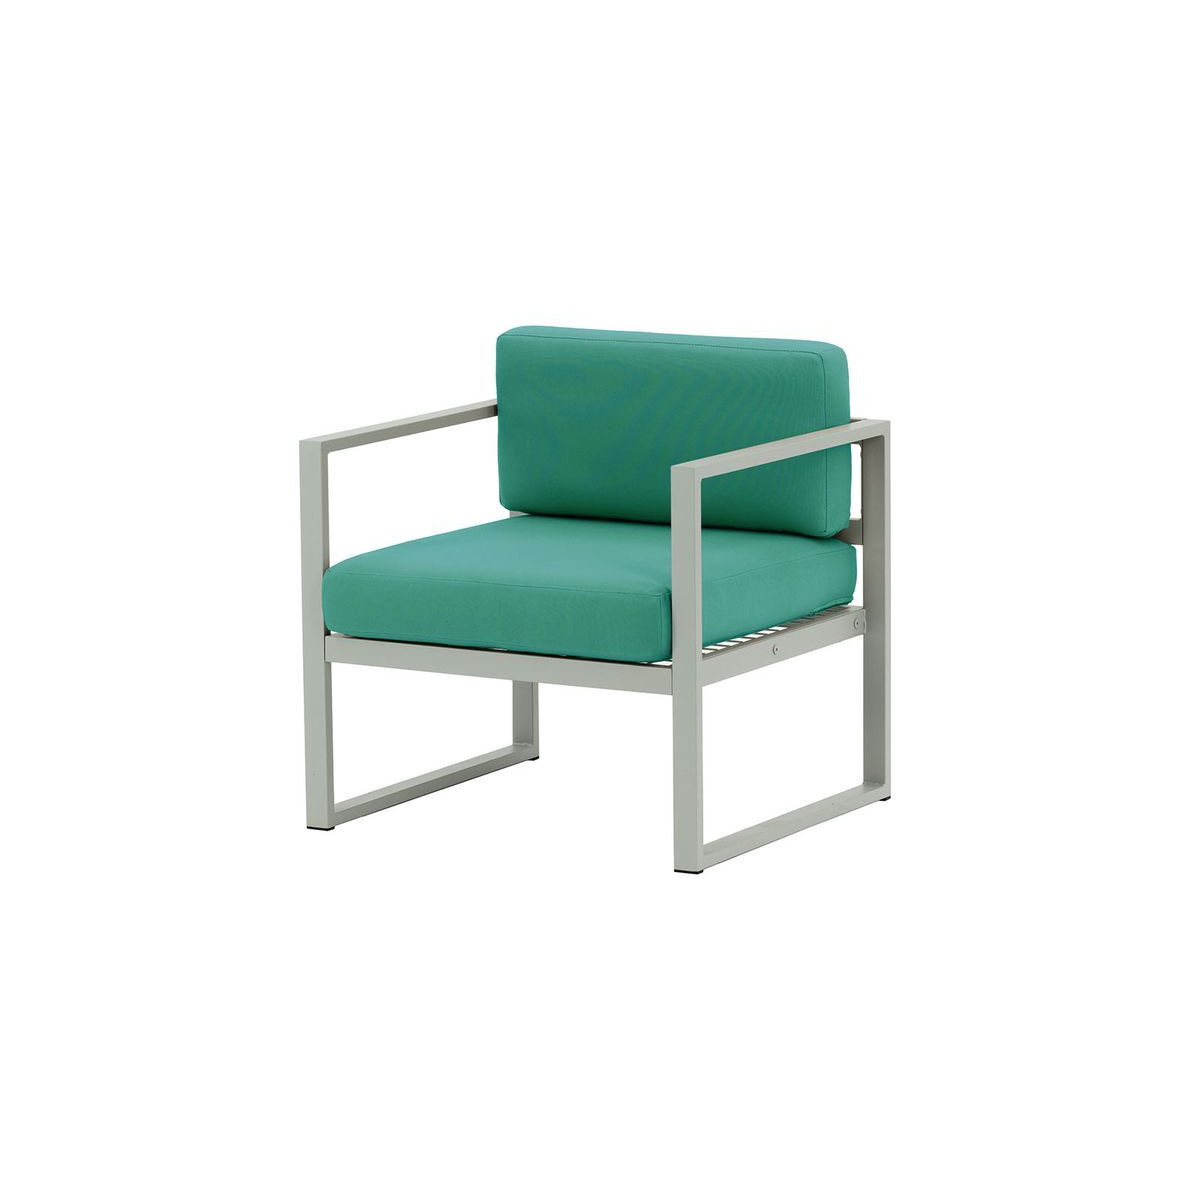 Sunset Garden Armchair, turquoise, Leg colour: grey steel - image 1